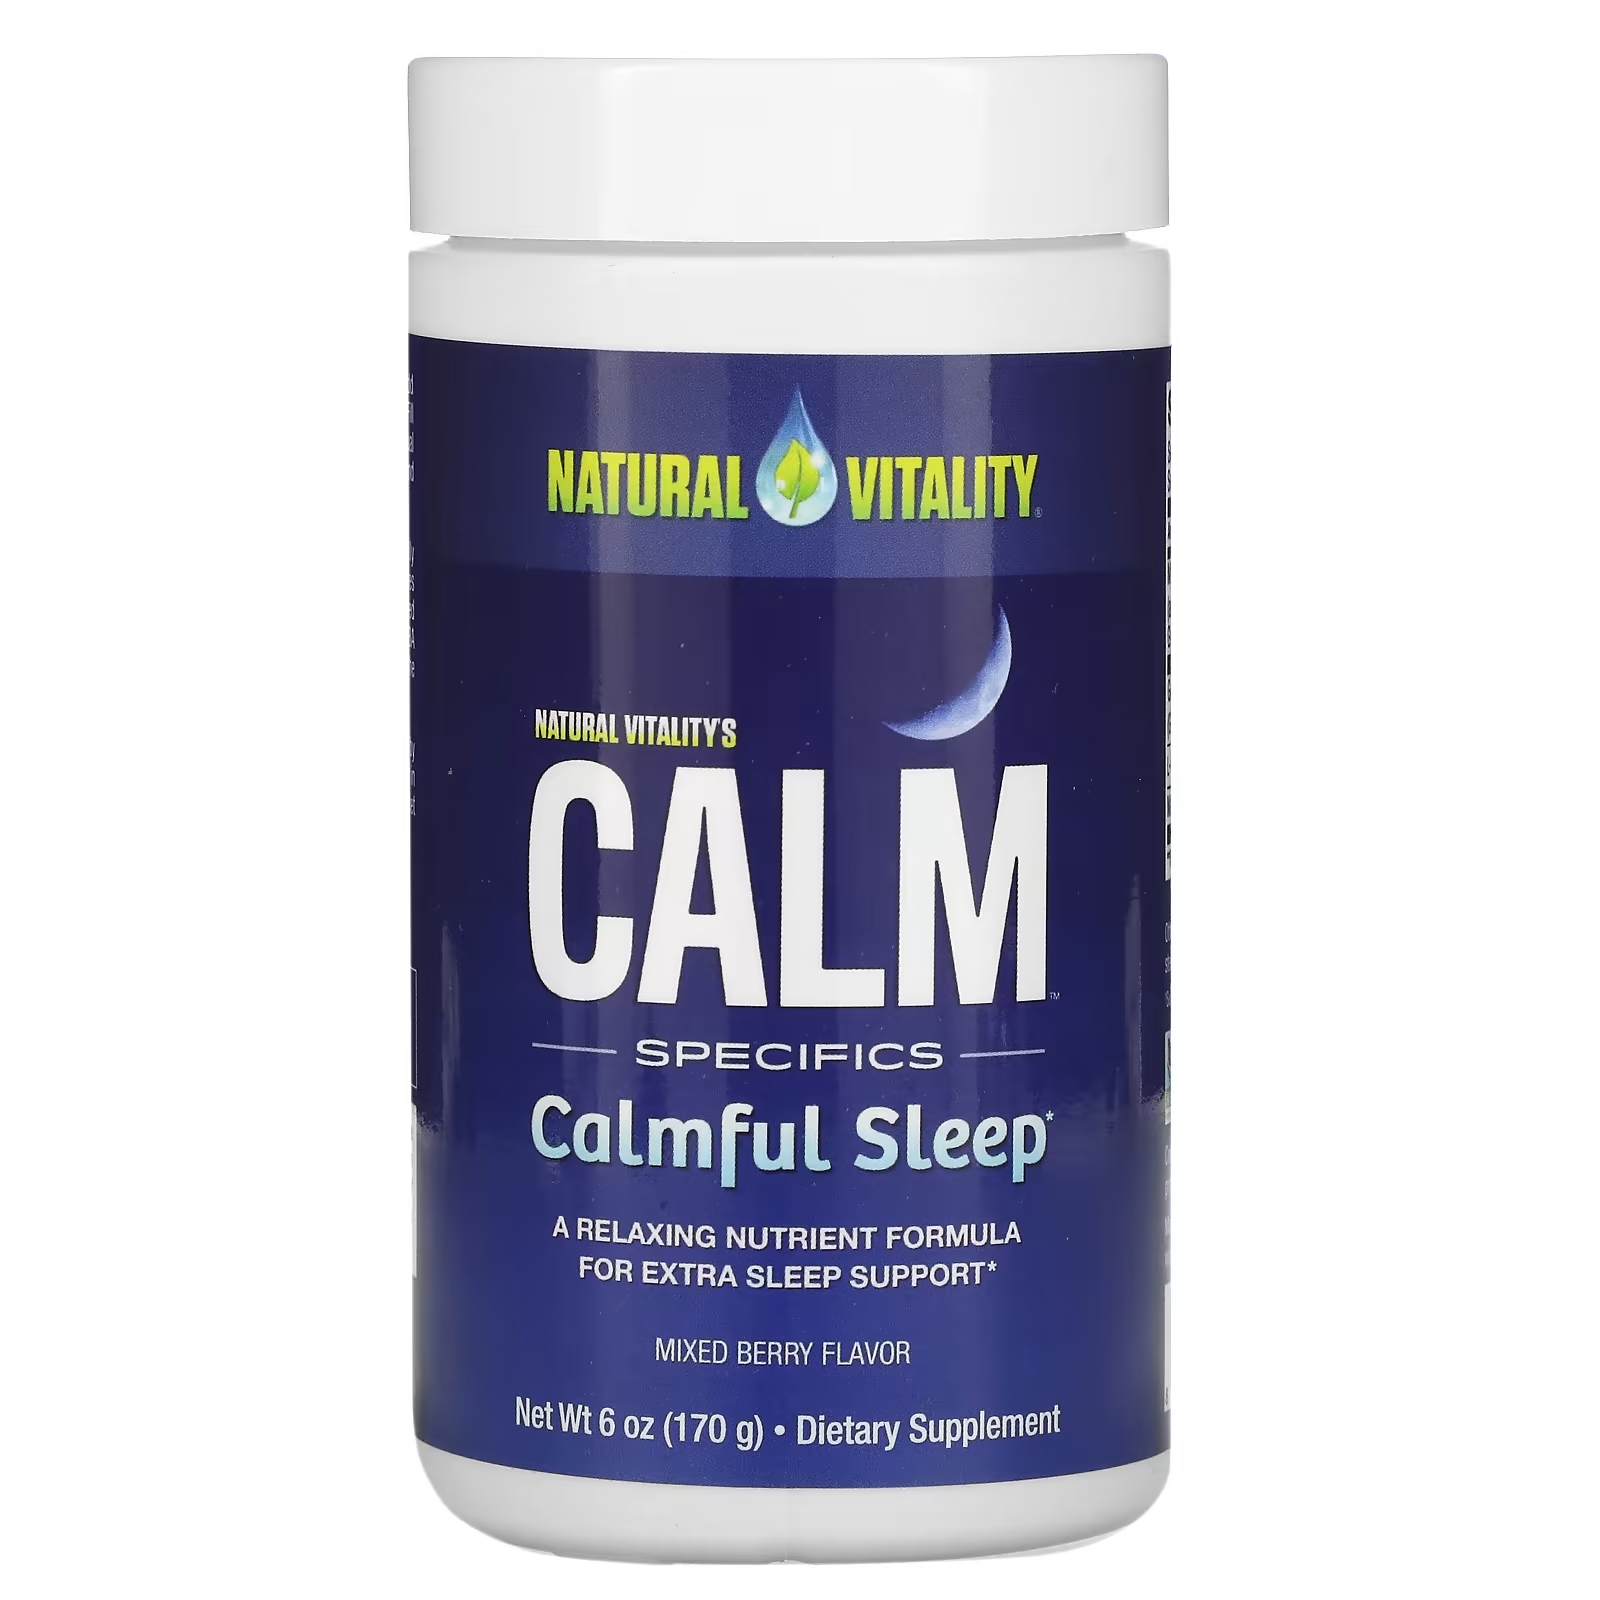 Natural Vitality CALM Specifics добавка для спокойного сна со вкусом ягод, 170 г enzymatic therapy remifemin добавка для спокойного сна 21 таблетка